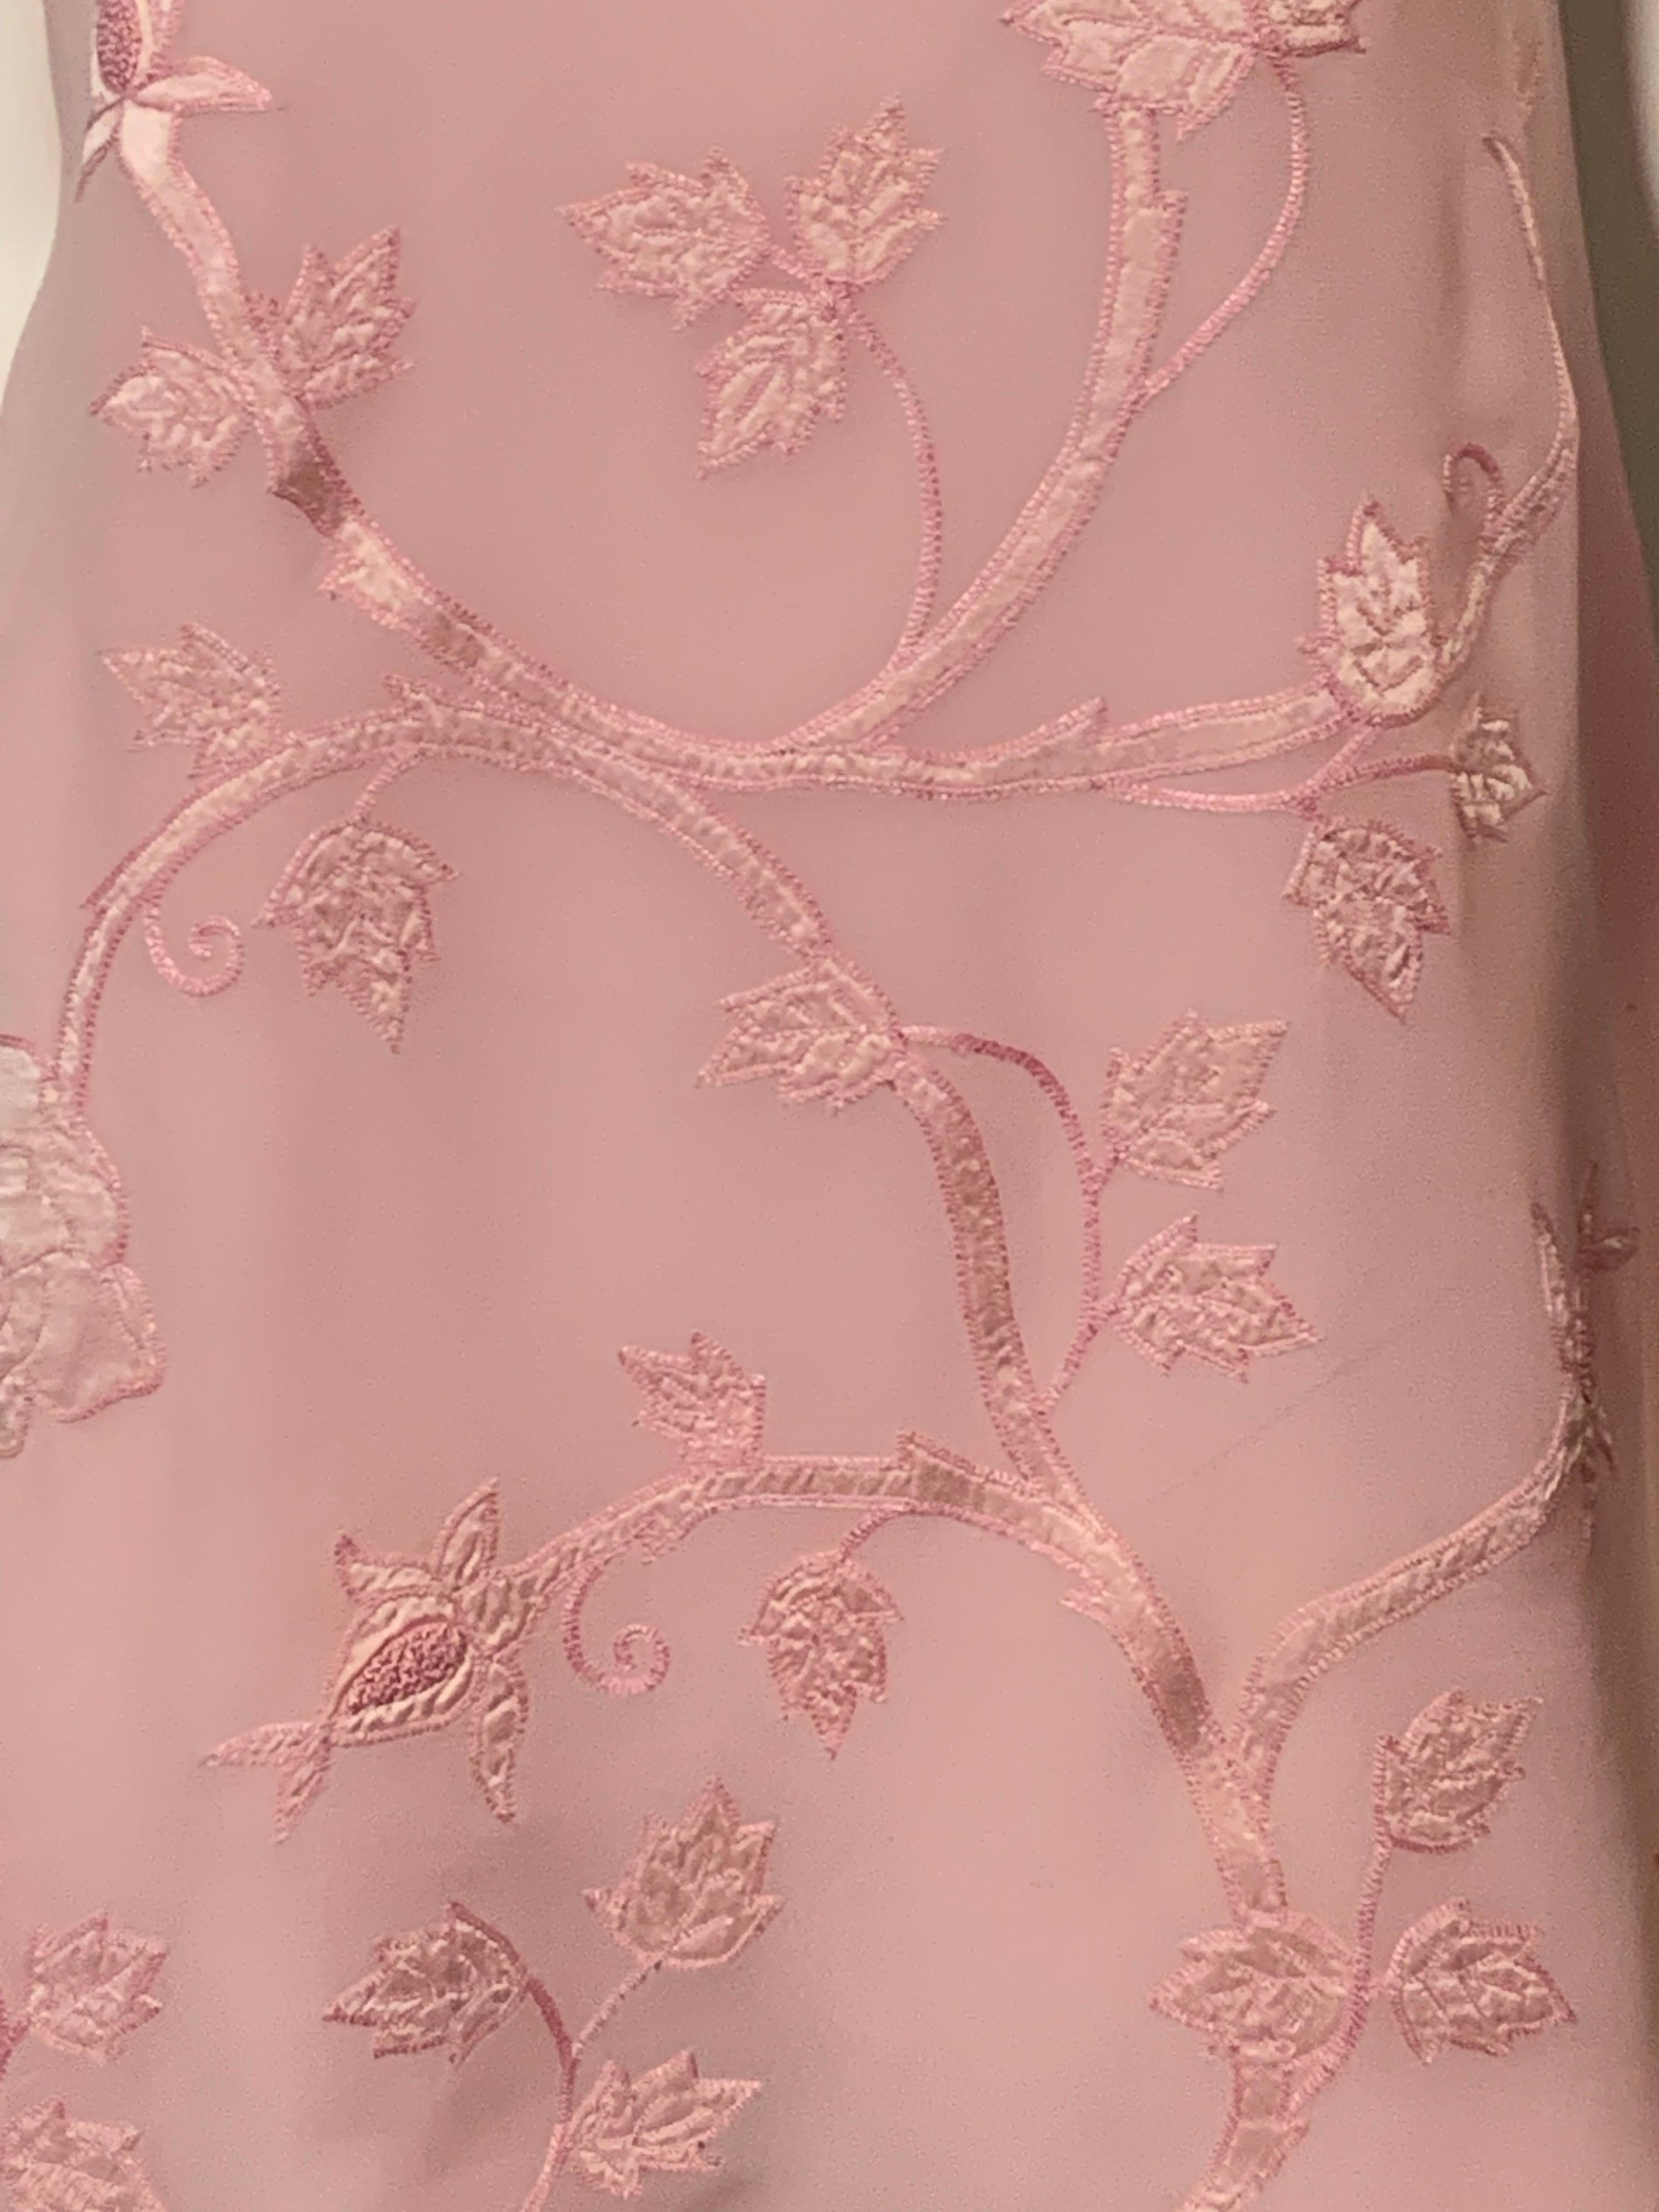 Alberta Ferretti Pink Silk Chiffon Floral Lingerie Dress Appliqued Satin Flowers For Sale 1